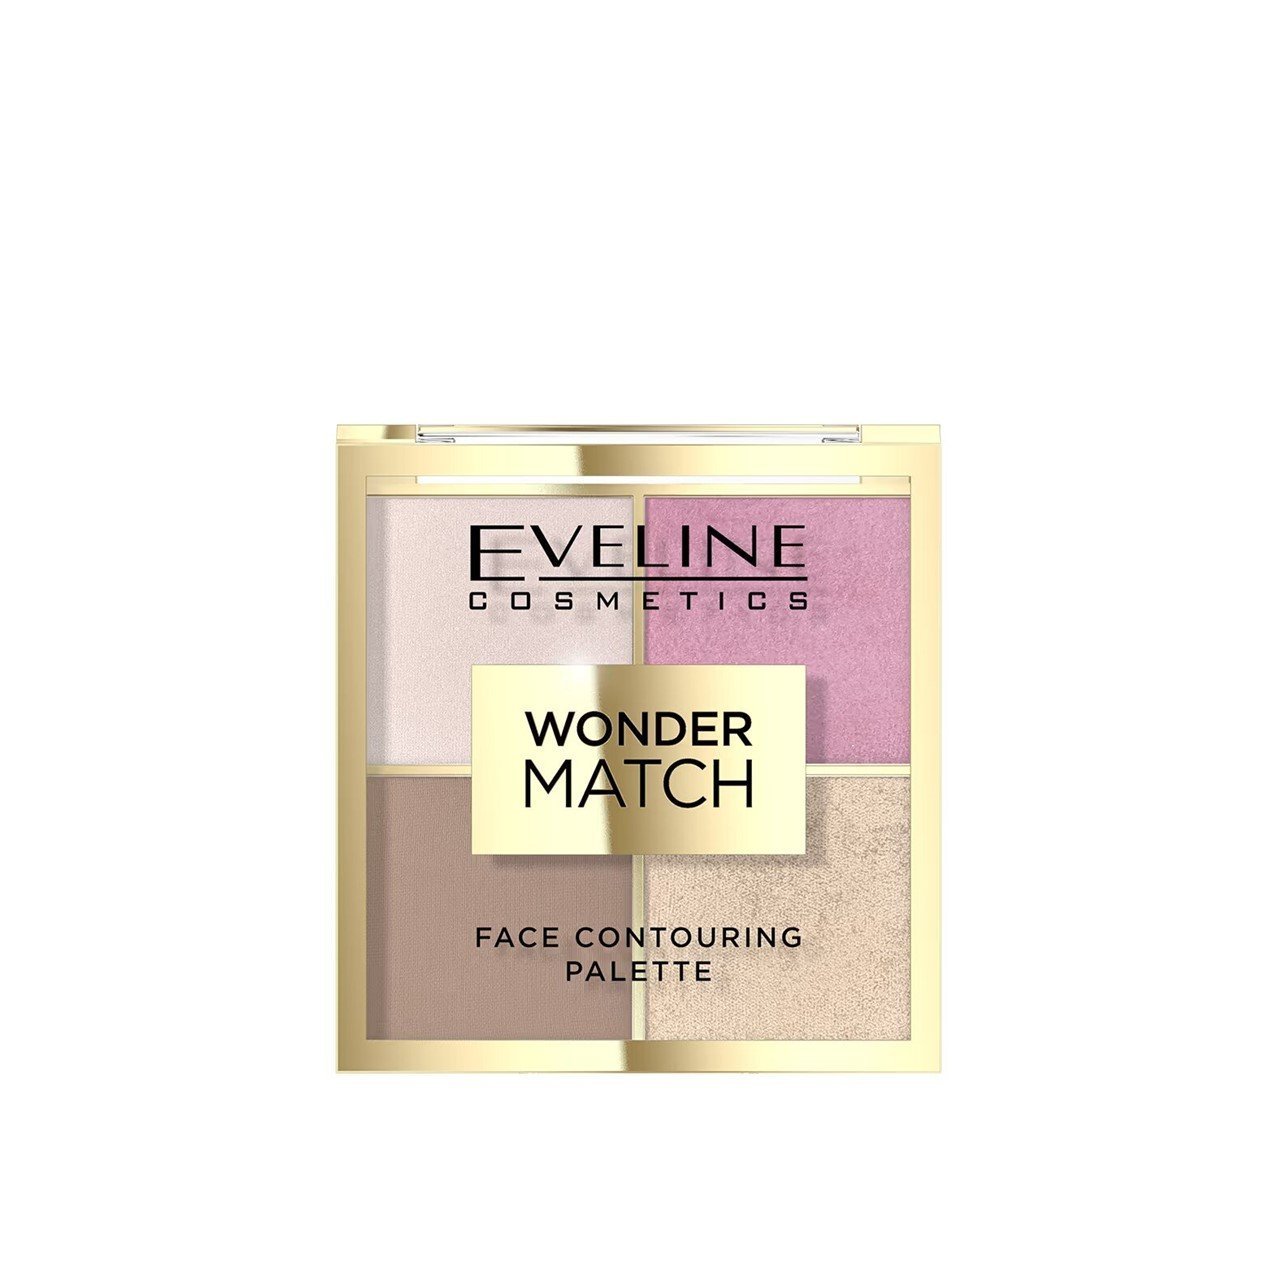 Eveline Cosmetics Wonder Match Face Contouring Palette 01 10.8g